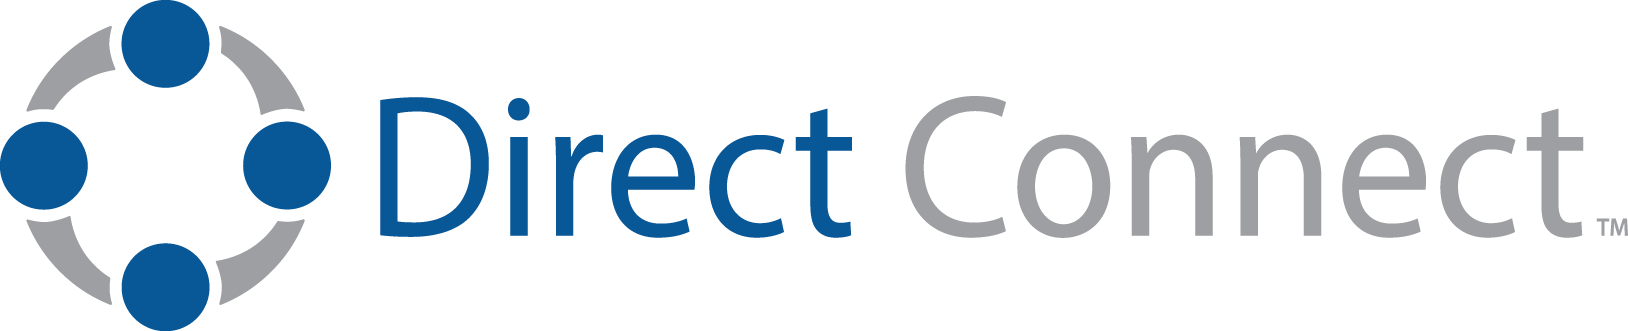 Directly connected. Direct connect. Директ Коннект что это. Direct service лого. Connect logo.